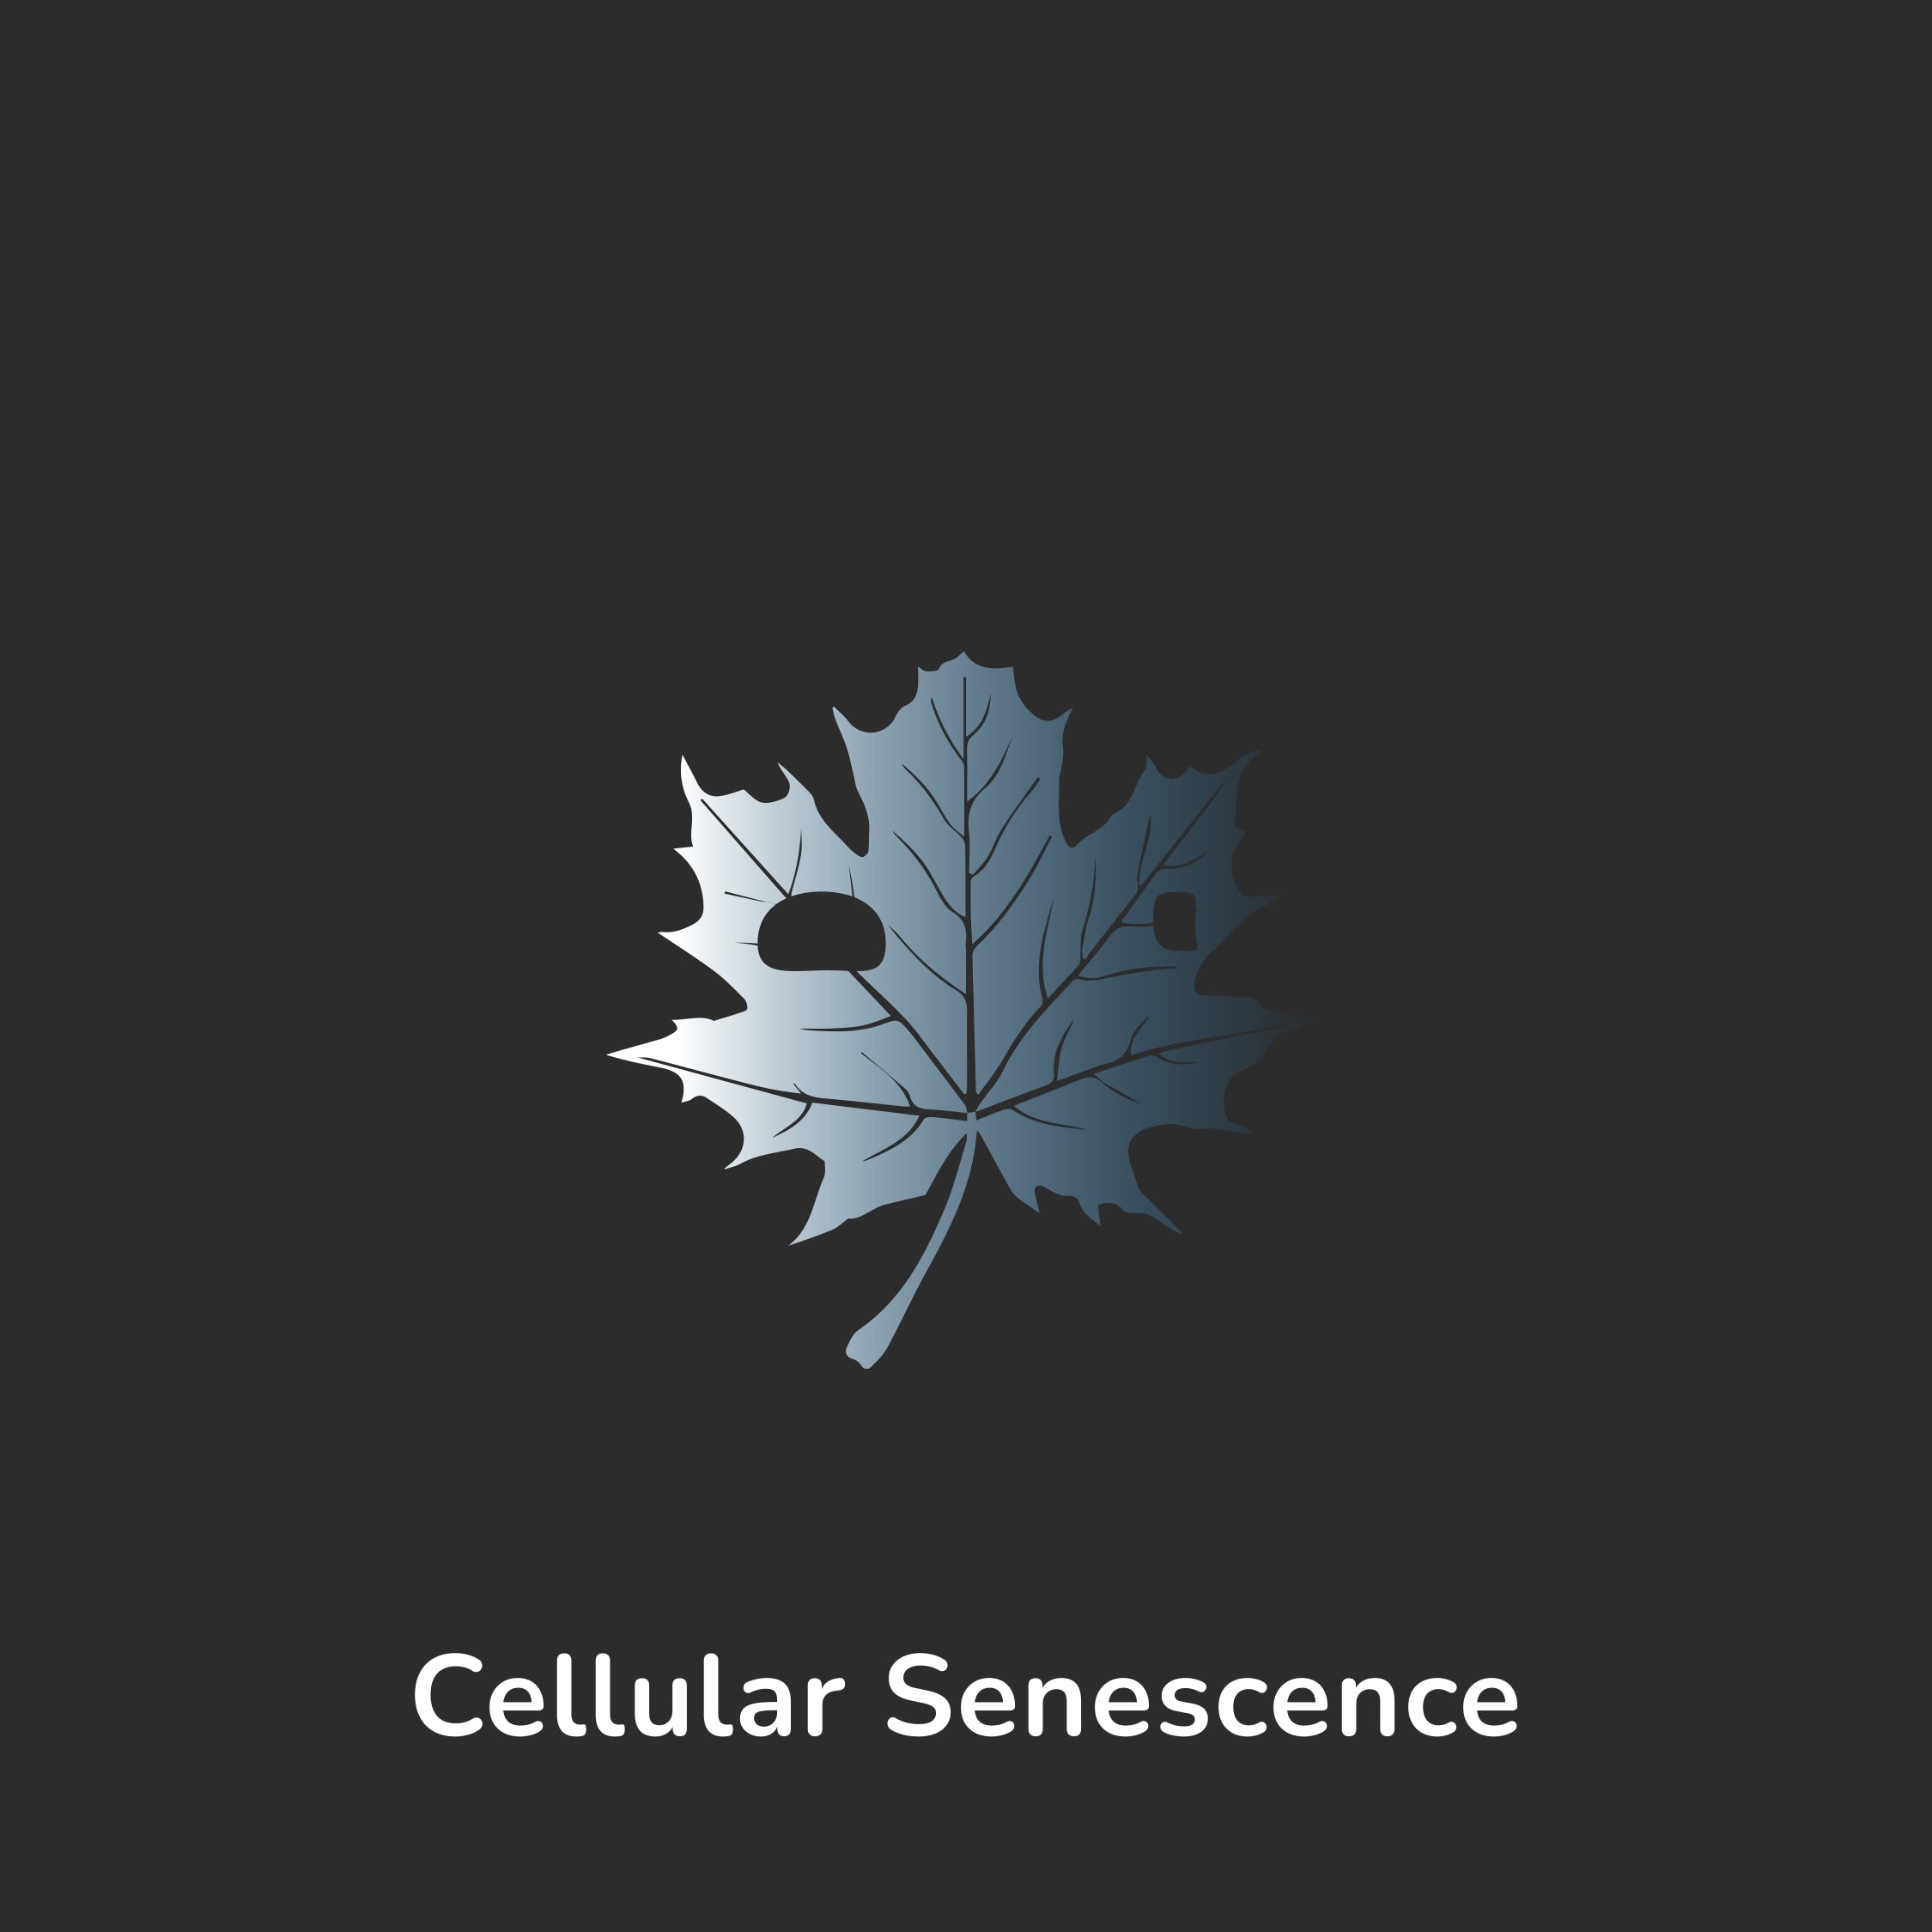 Aging Hallmark - Cellular Senescence